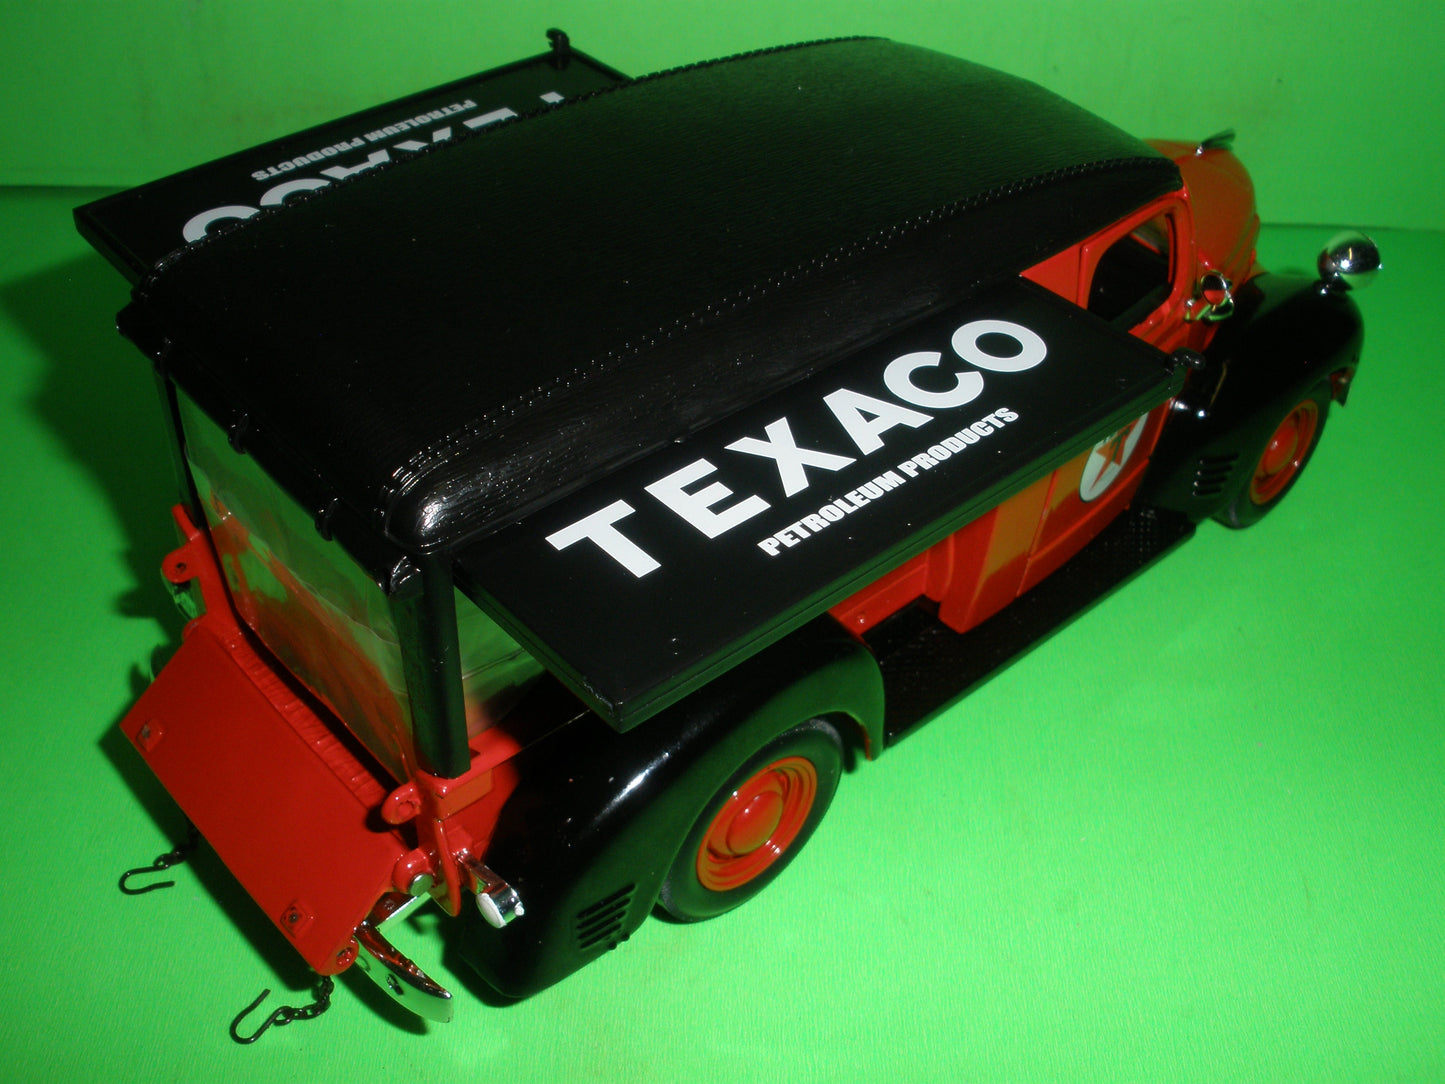 Texaco 1947 Dodge Canopy Truck Regular Edition